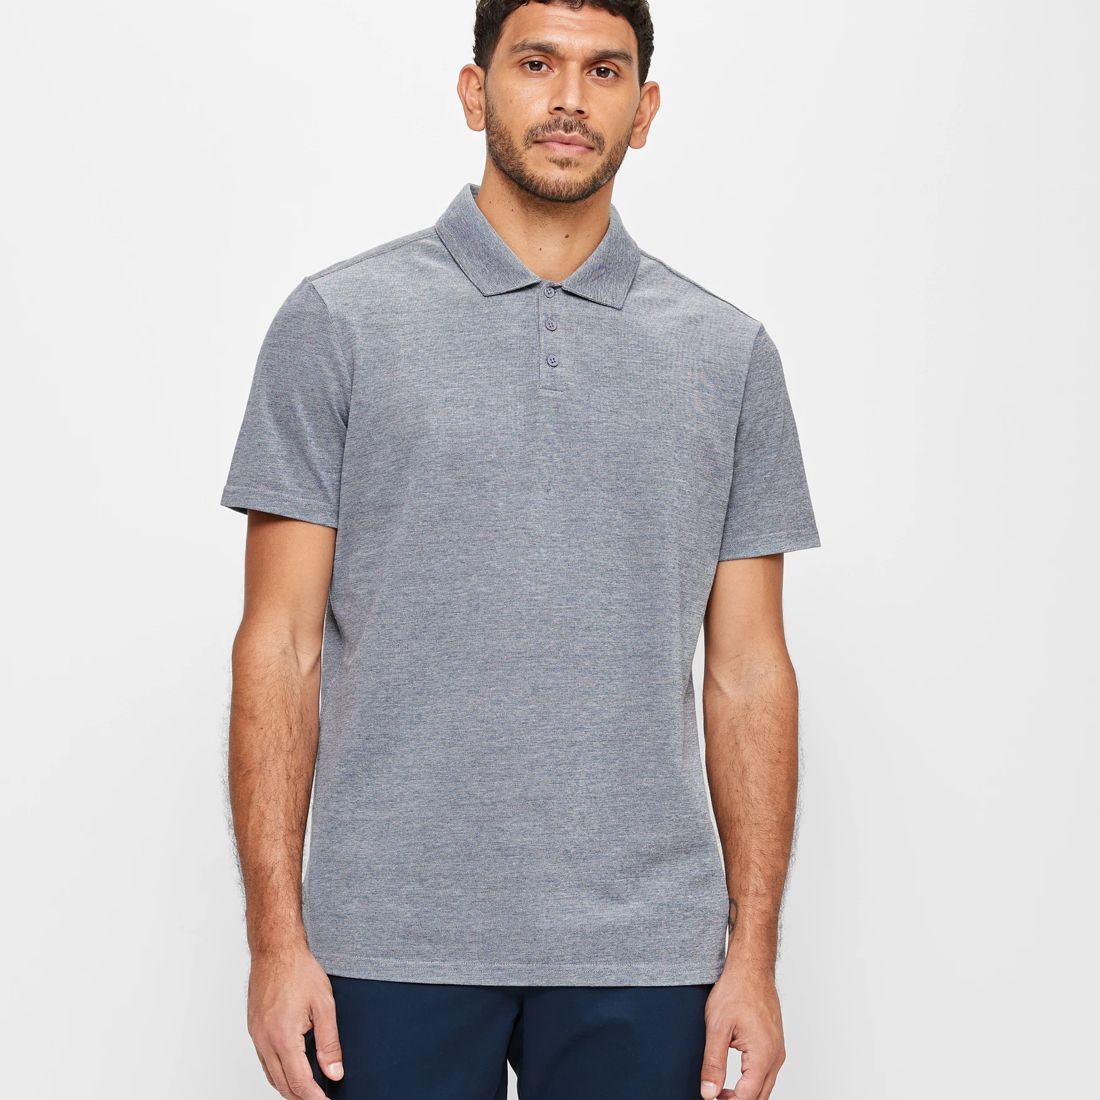 Preview Polo Shirt | Target Australia